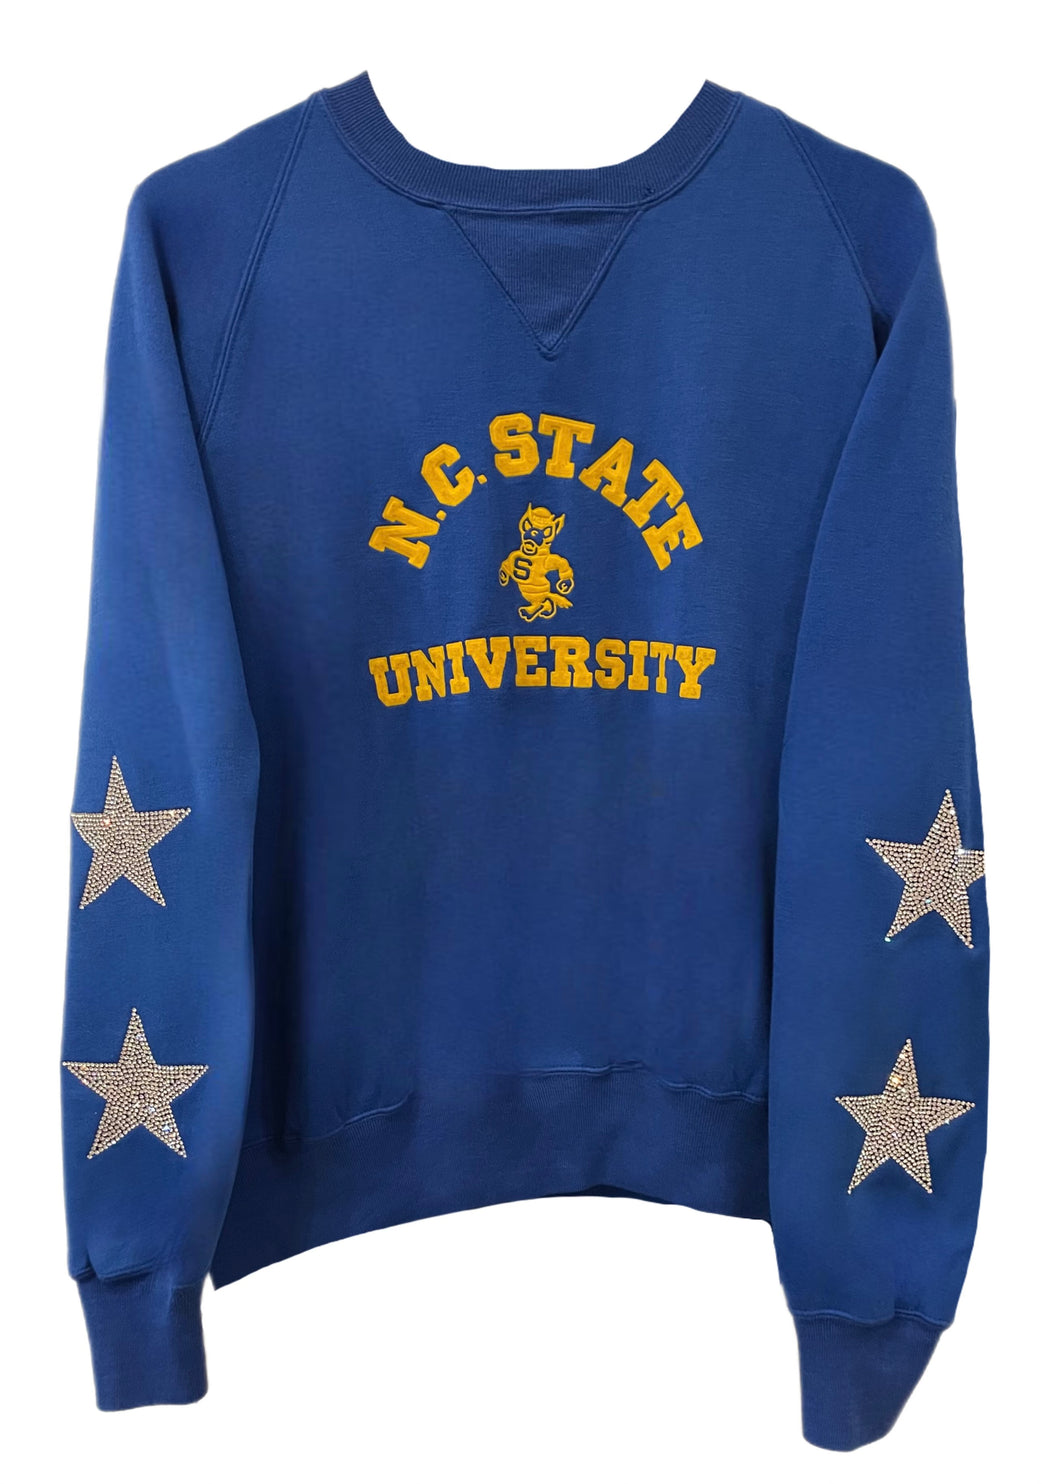 North Carolina State University, One of a KIND Vintage Sweatshirt with Crystal Star Design